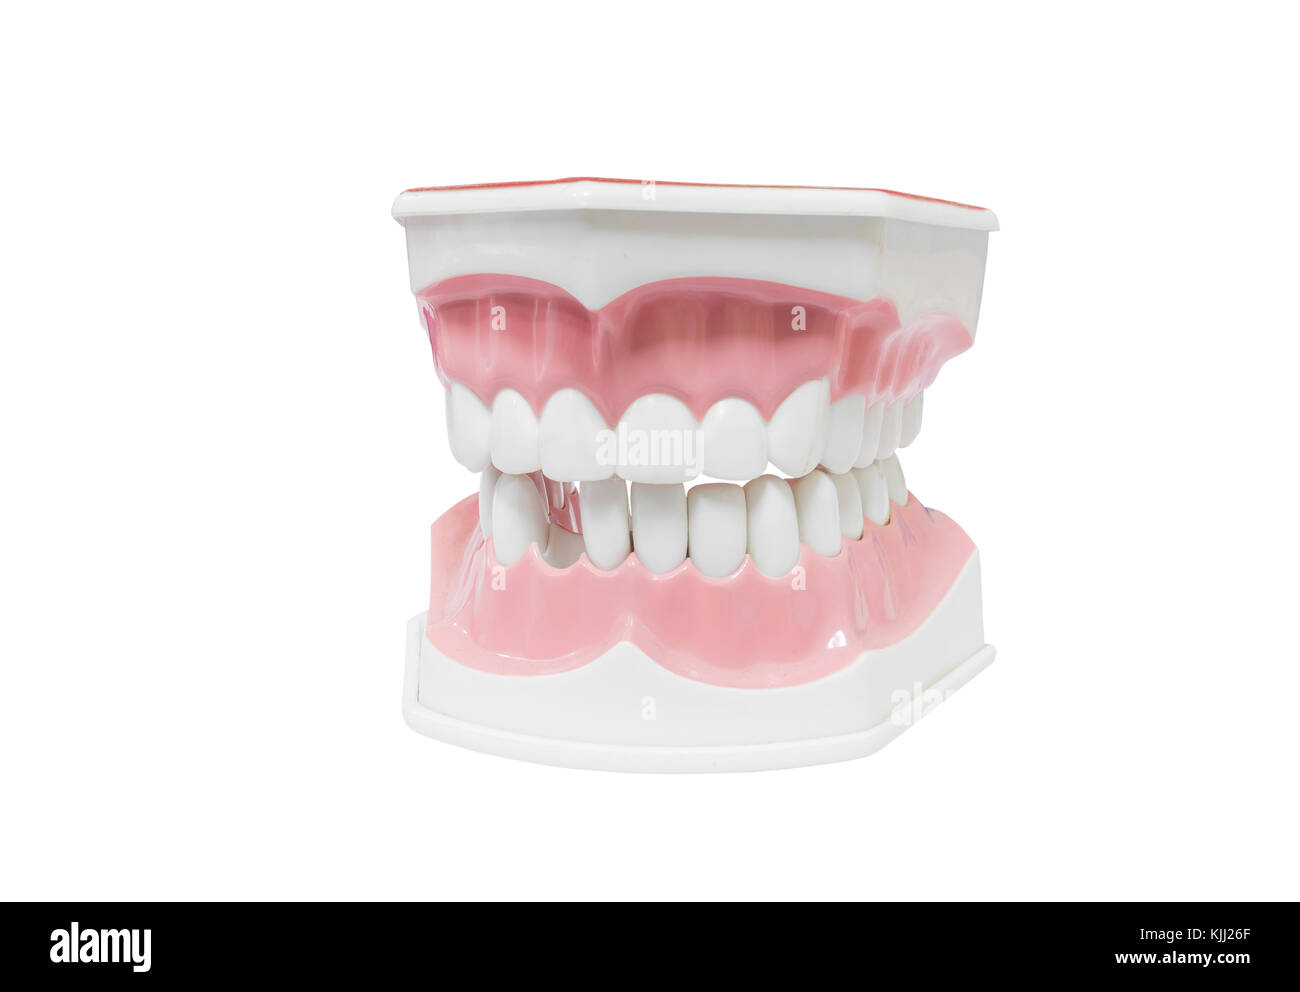 Dental Model Of Teeth Stock Photo 166354007 Alamy